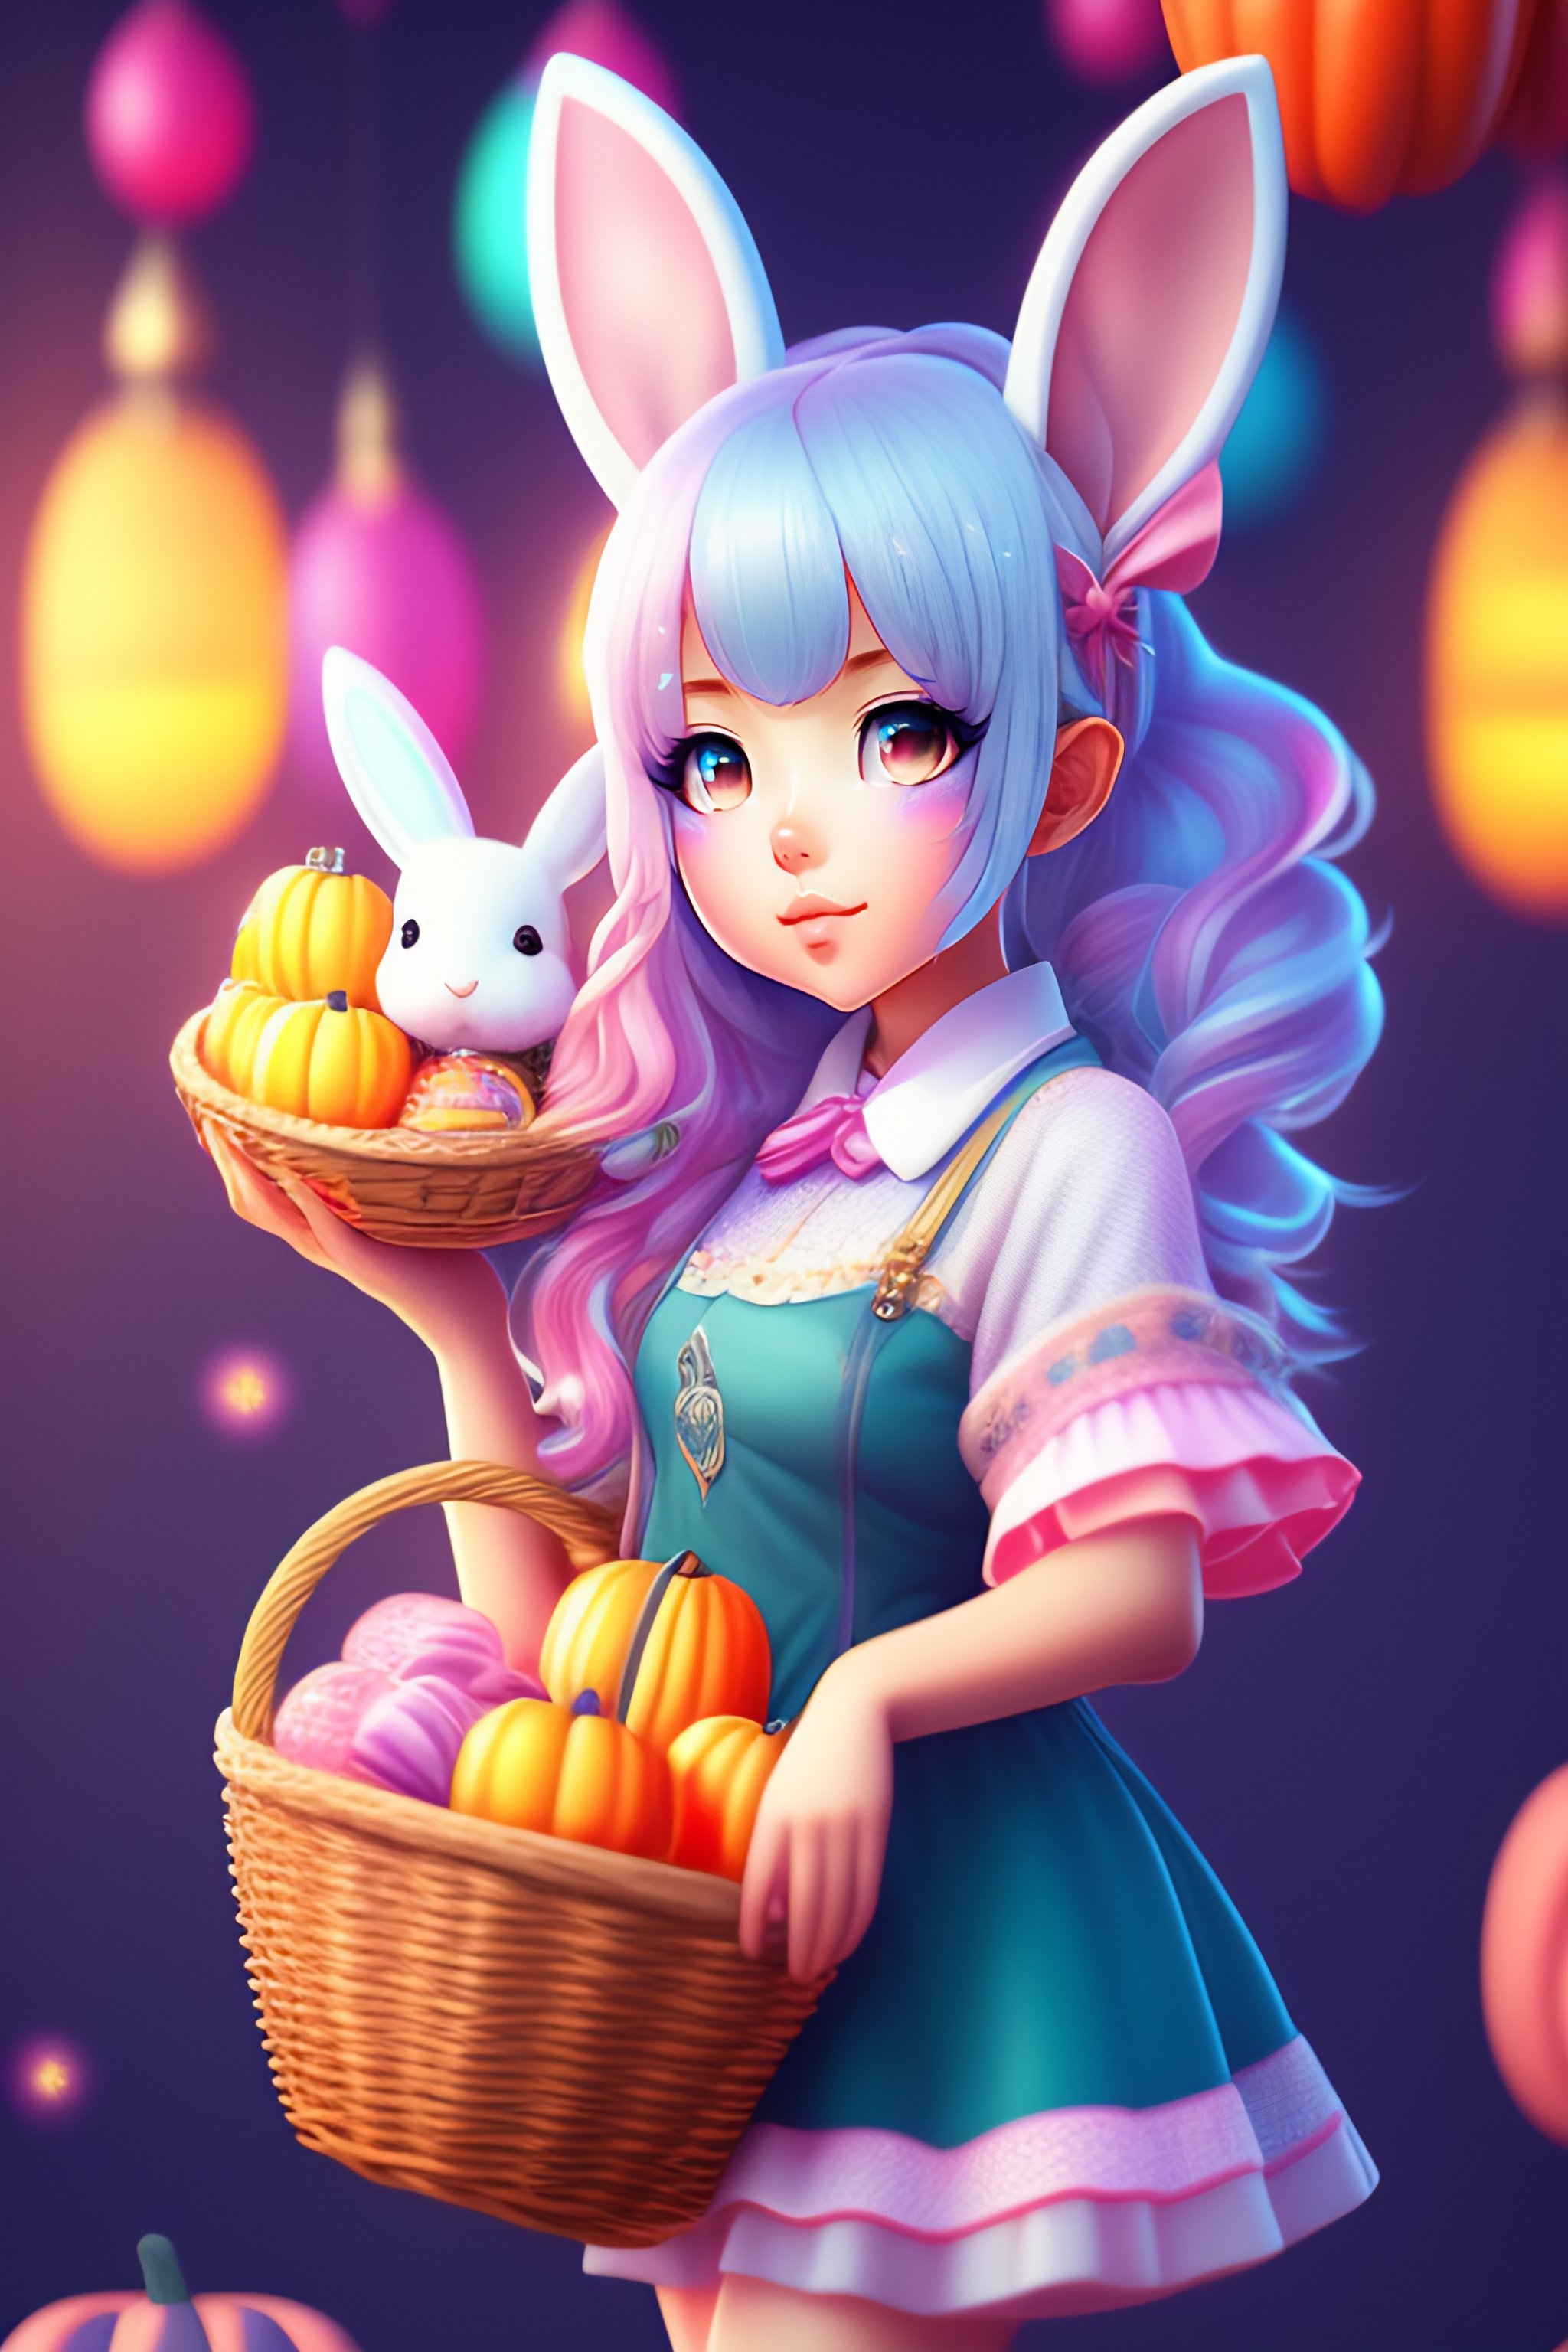 Lexica - Anime,wallpaper like pencil drawing, digital art of cute kawaii  girl with bunny ears, light blue hair,bob,pink eyes,holding a  Omikuji,backgr